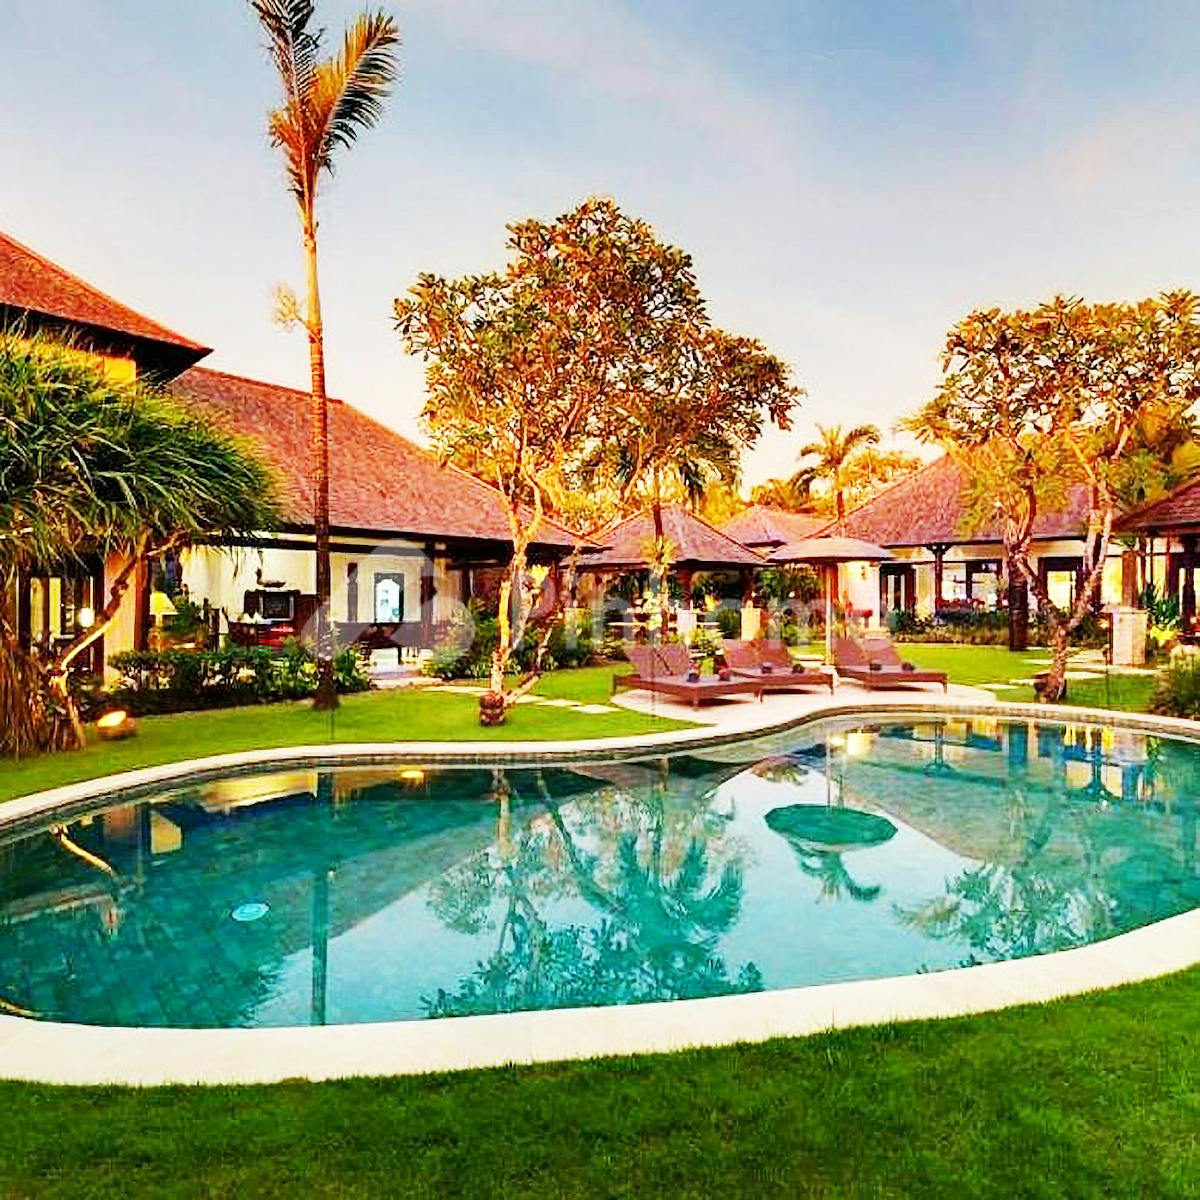 Dijual Tanah Residensial Fasilitas Terbaik di Jln Raya Pantai Batu Bolong Canggu, Bali - Gambar 1